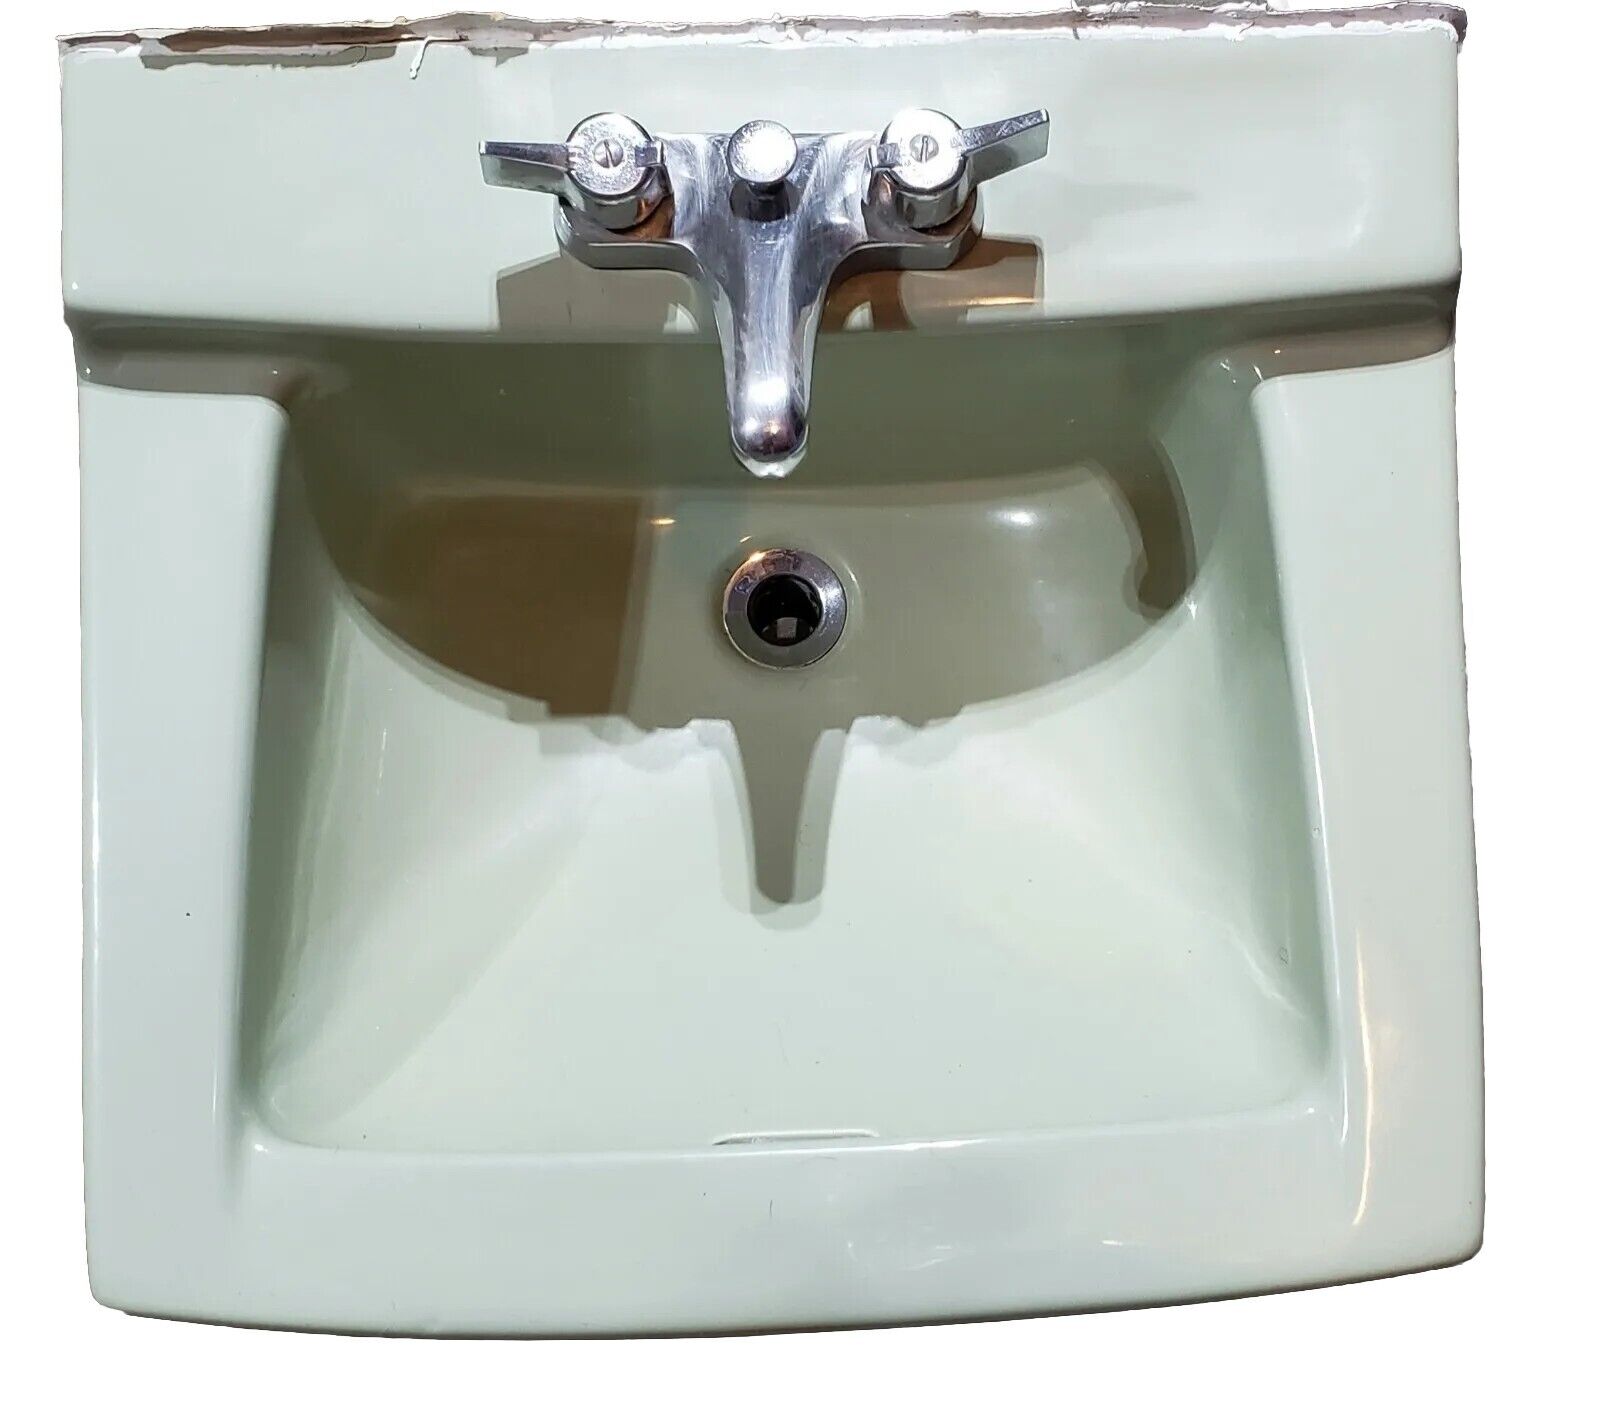 Vintage American Standard 'Mint Green' Bathroom Sink 1960s w/faucet fixtures